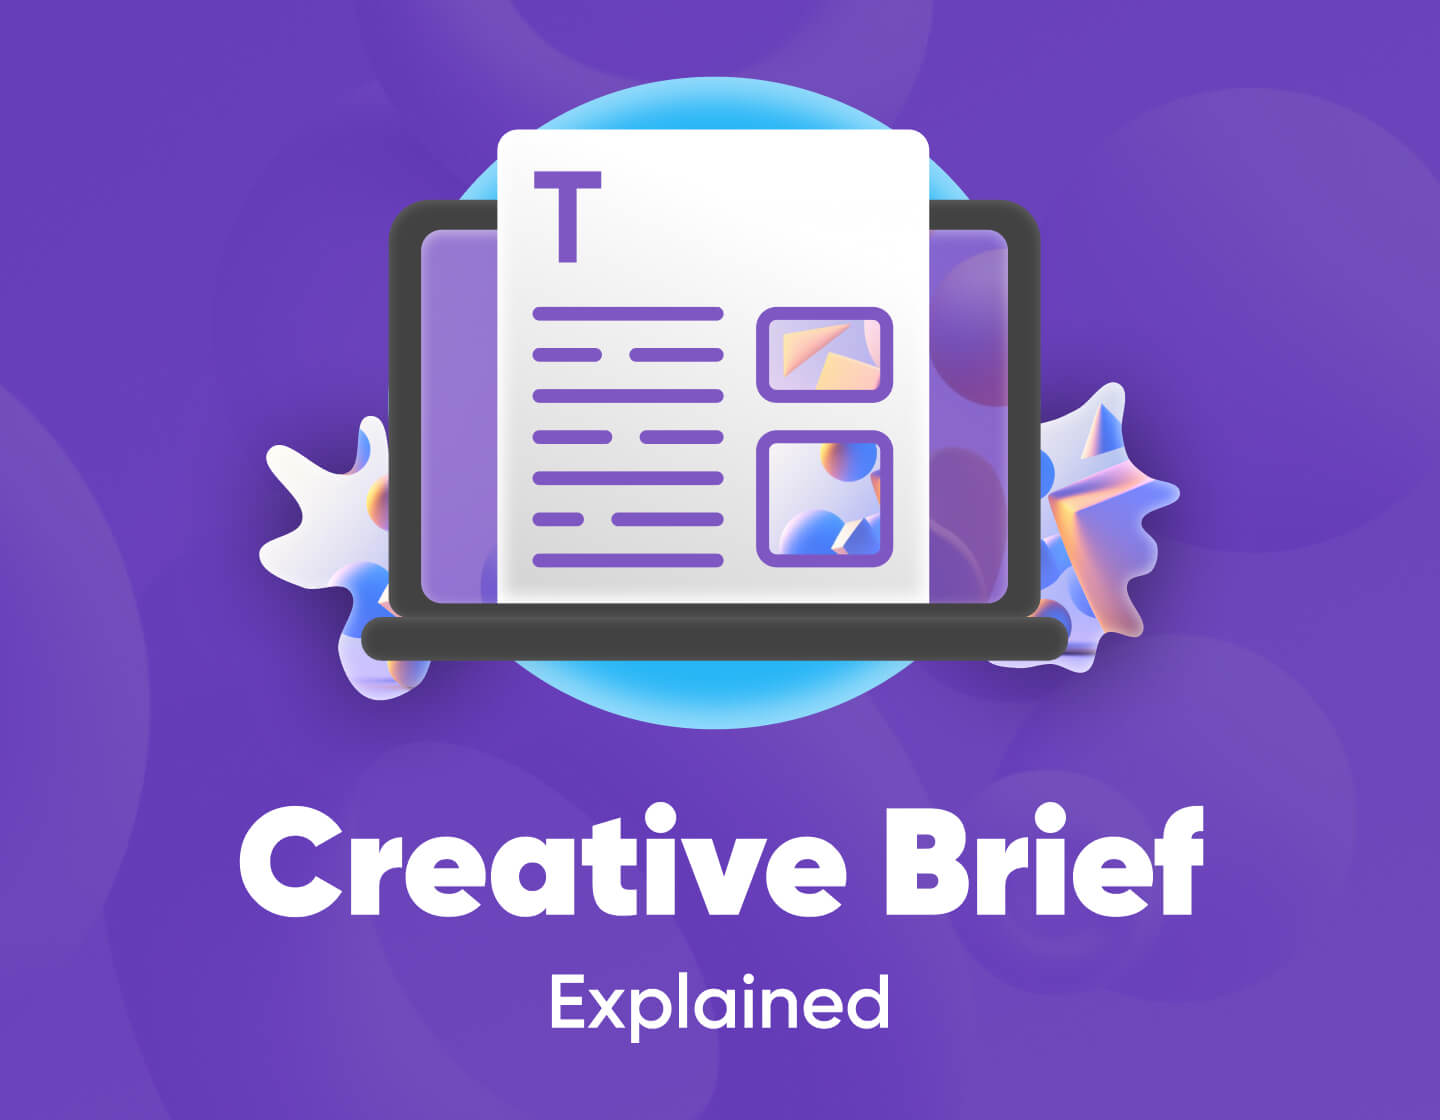 What is a Creative Brief?